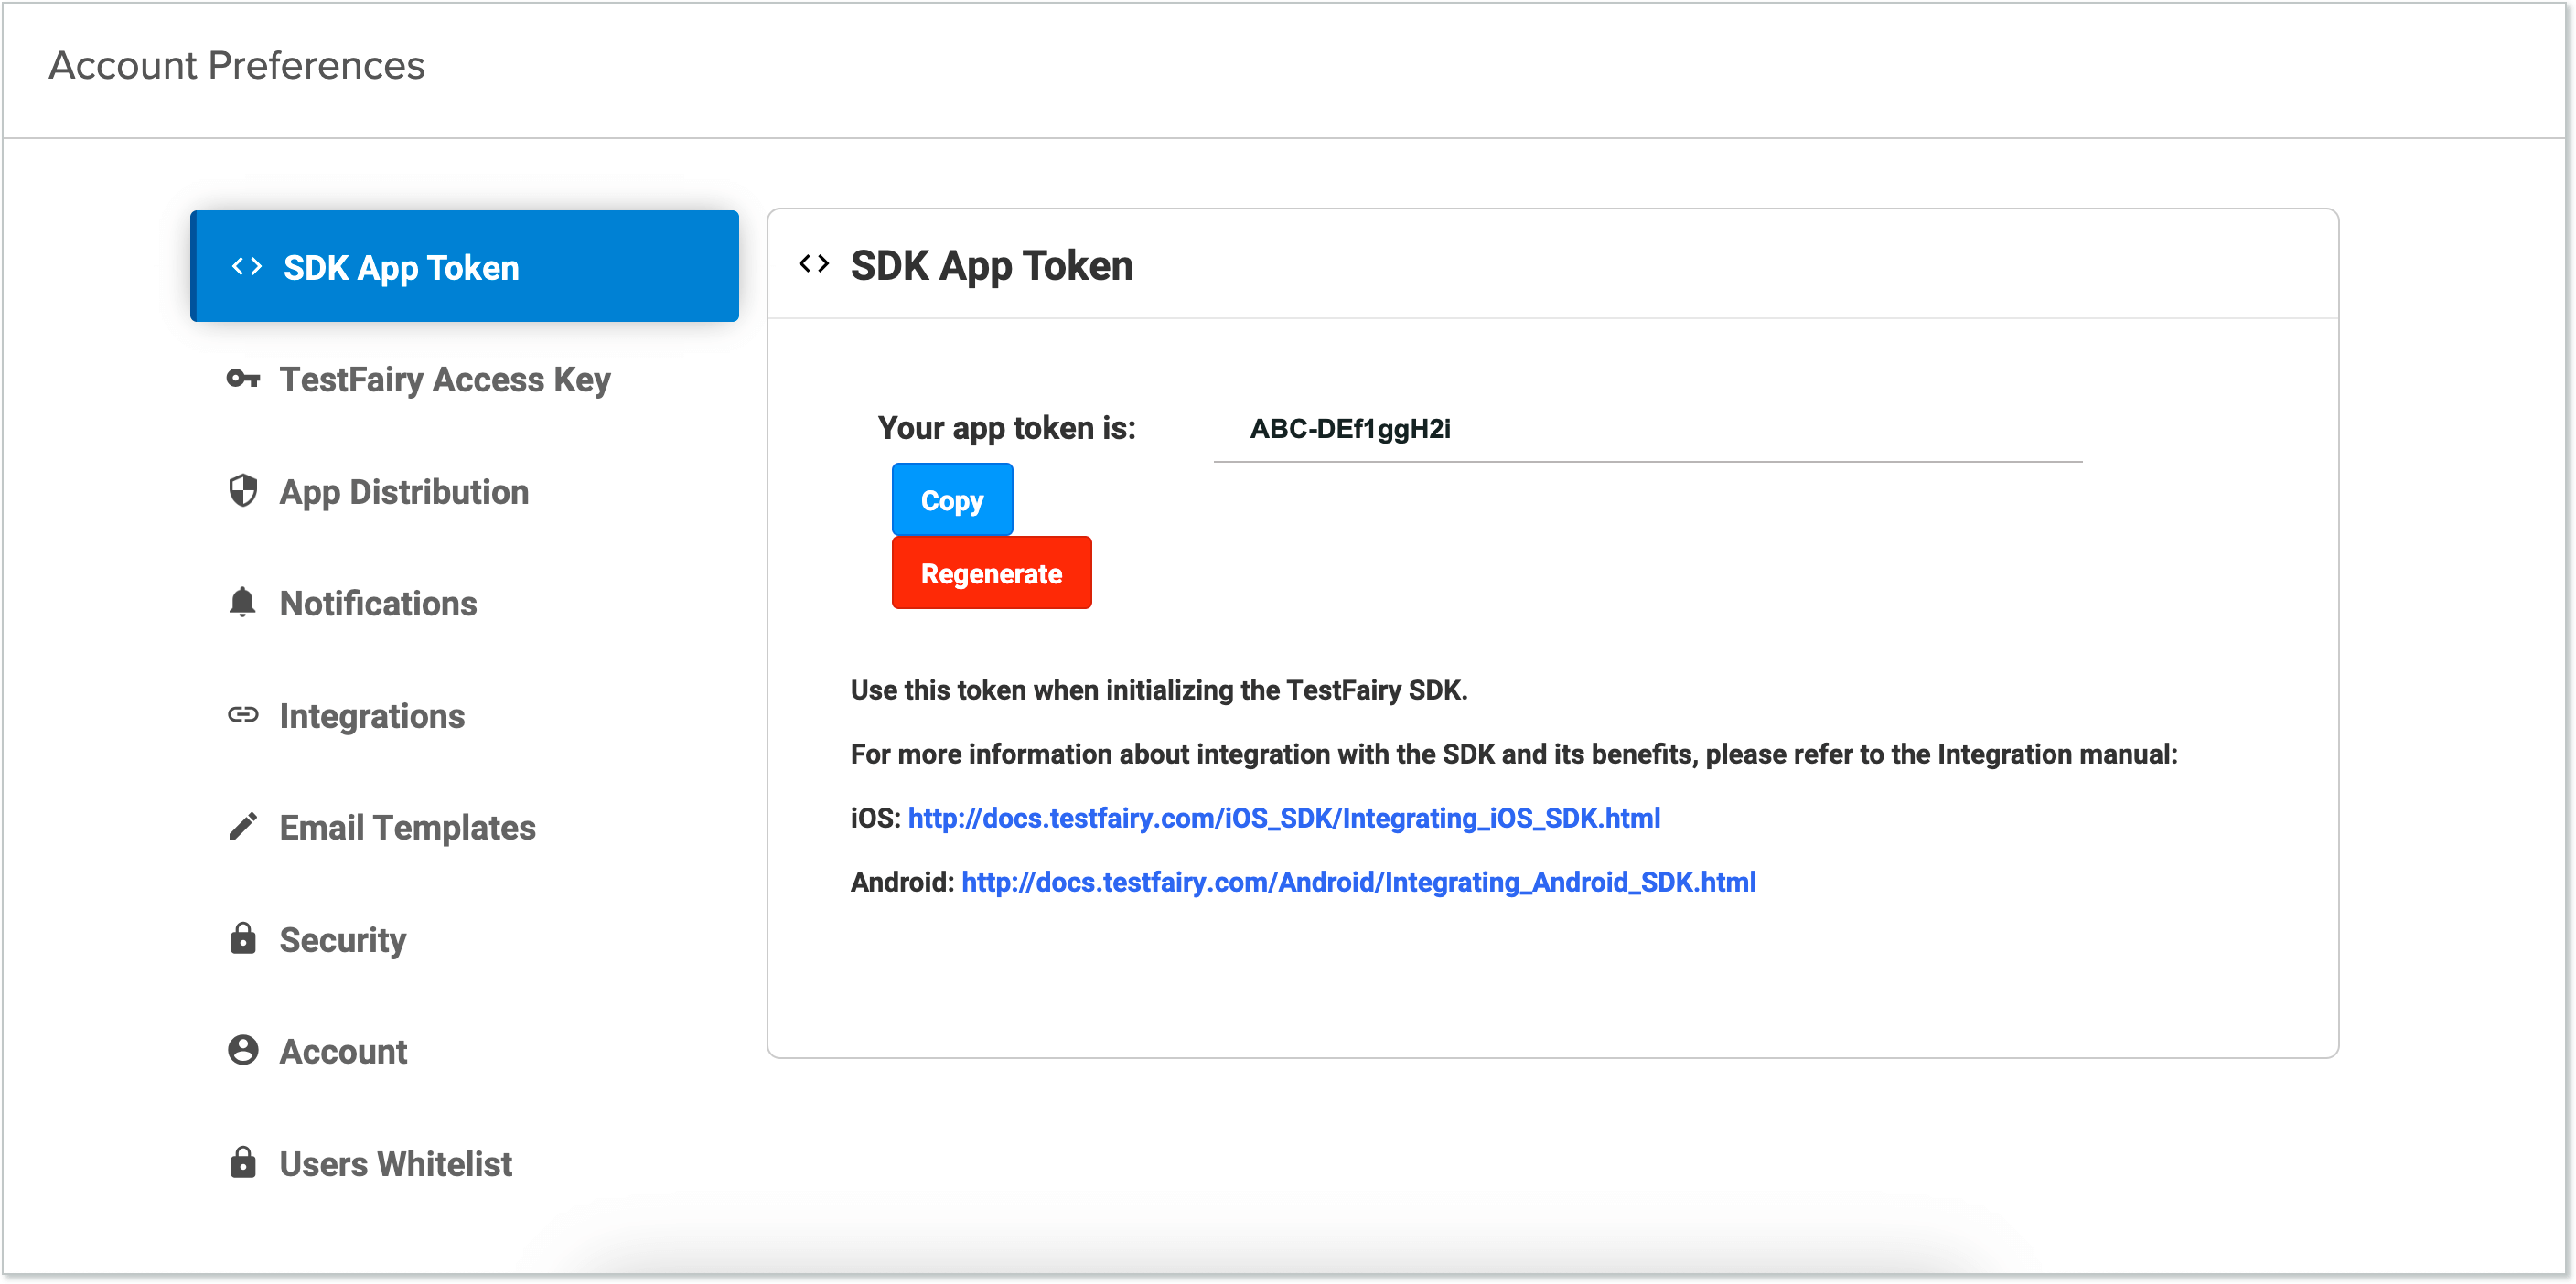 SDK App Token page